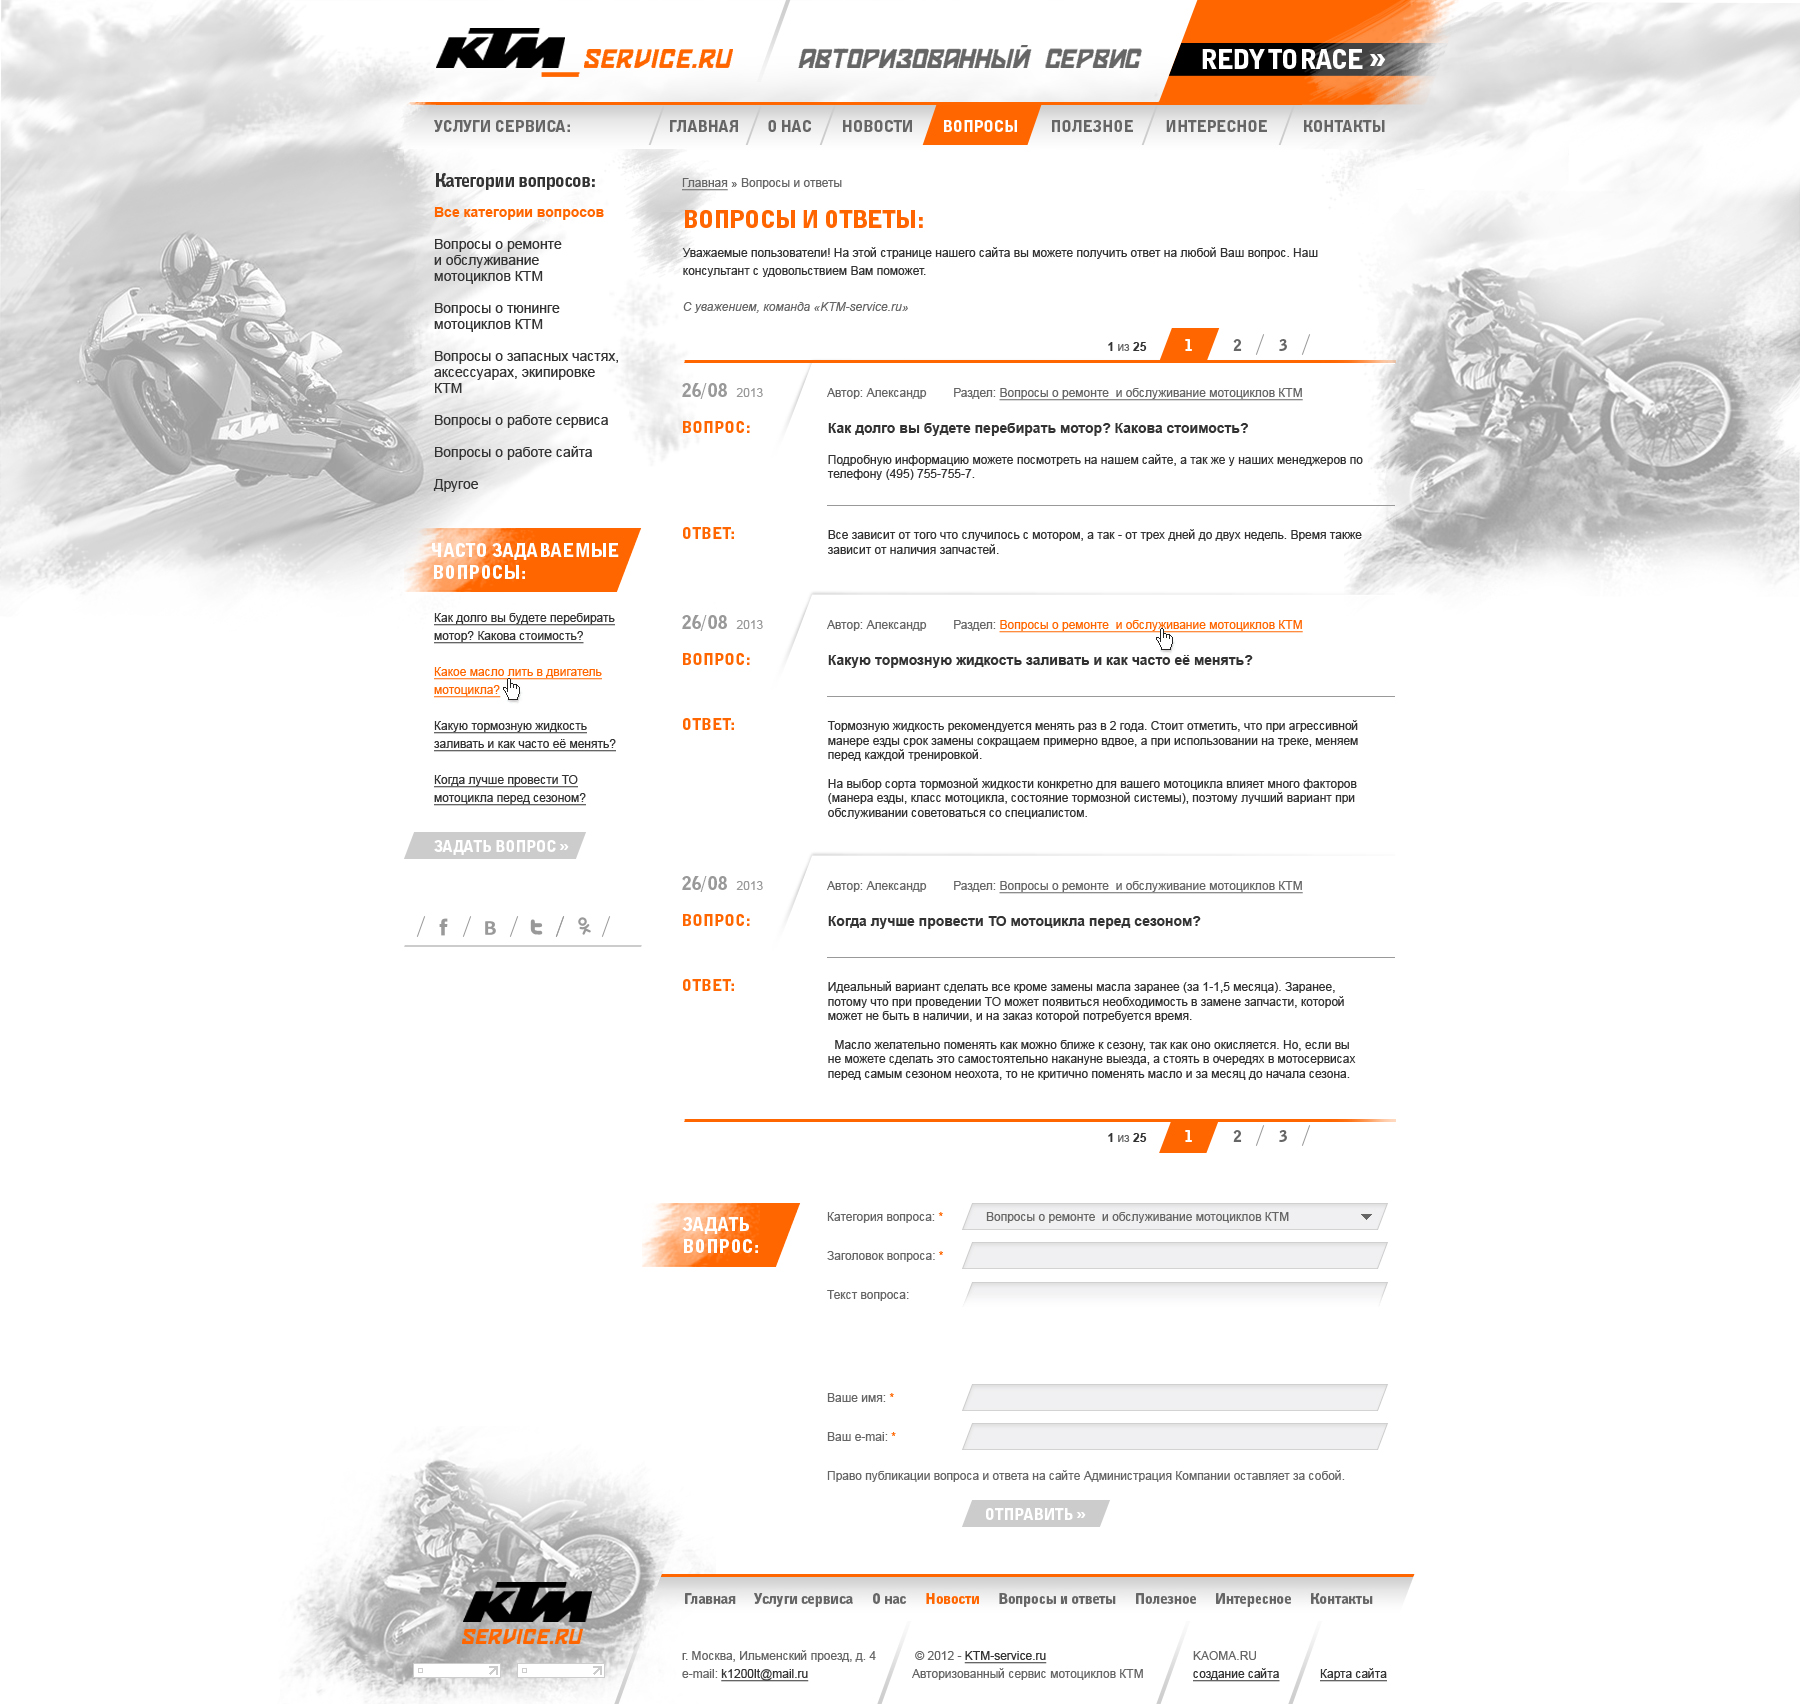 Создание сайта на 1С Битрикс KTM -service - страница FAQ